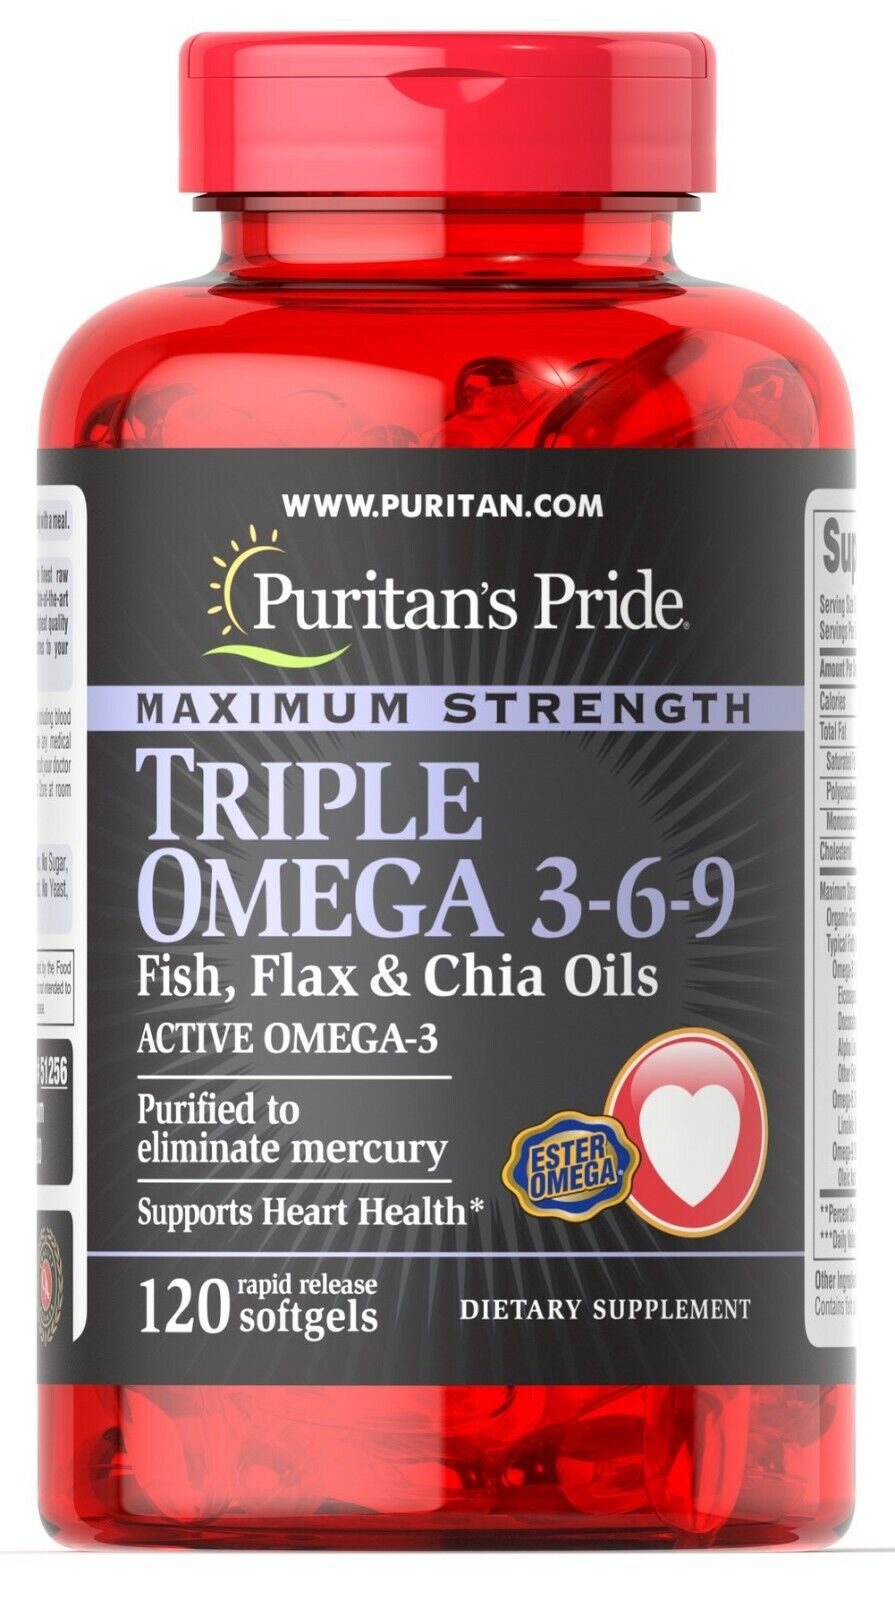 Puritan's Pride Maximum Strength Triple Omega 3-6-9 Fish Flax & Chia Oils 120 sg